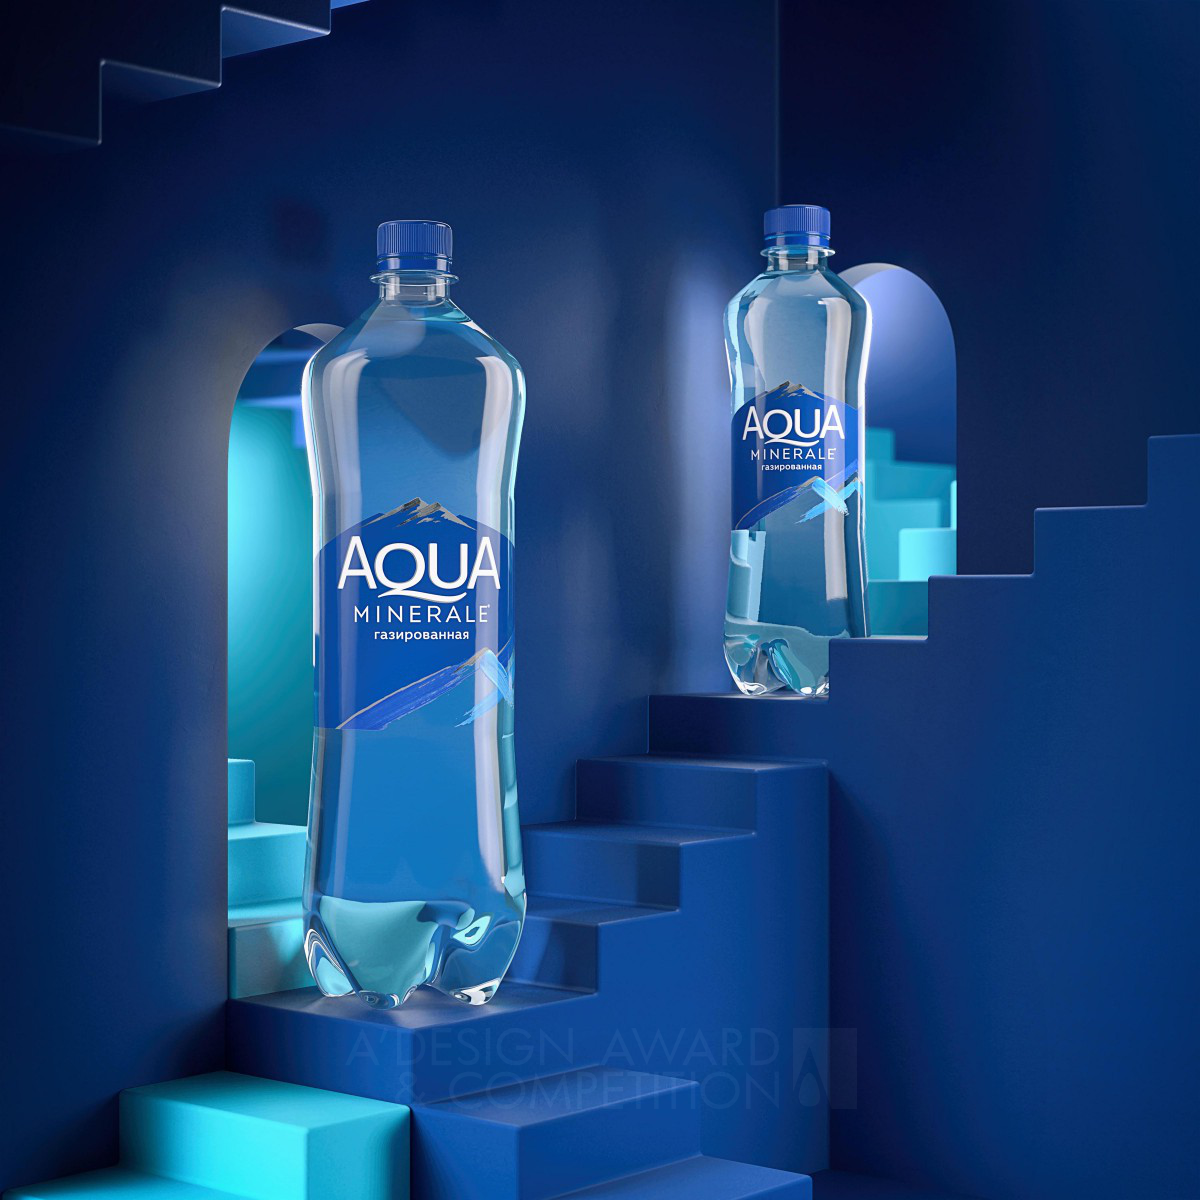 Aqua Minerale Redesign by PepsiCo Design & Innovation